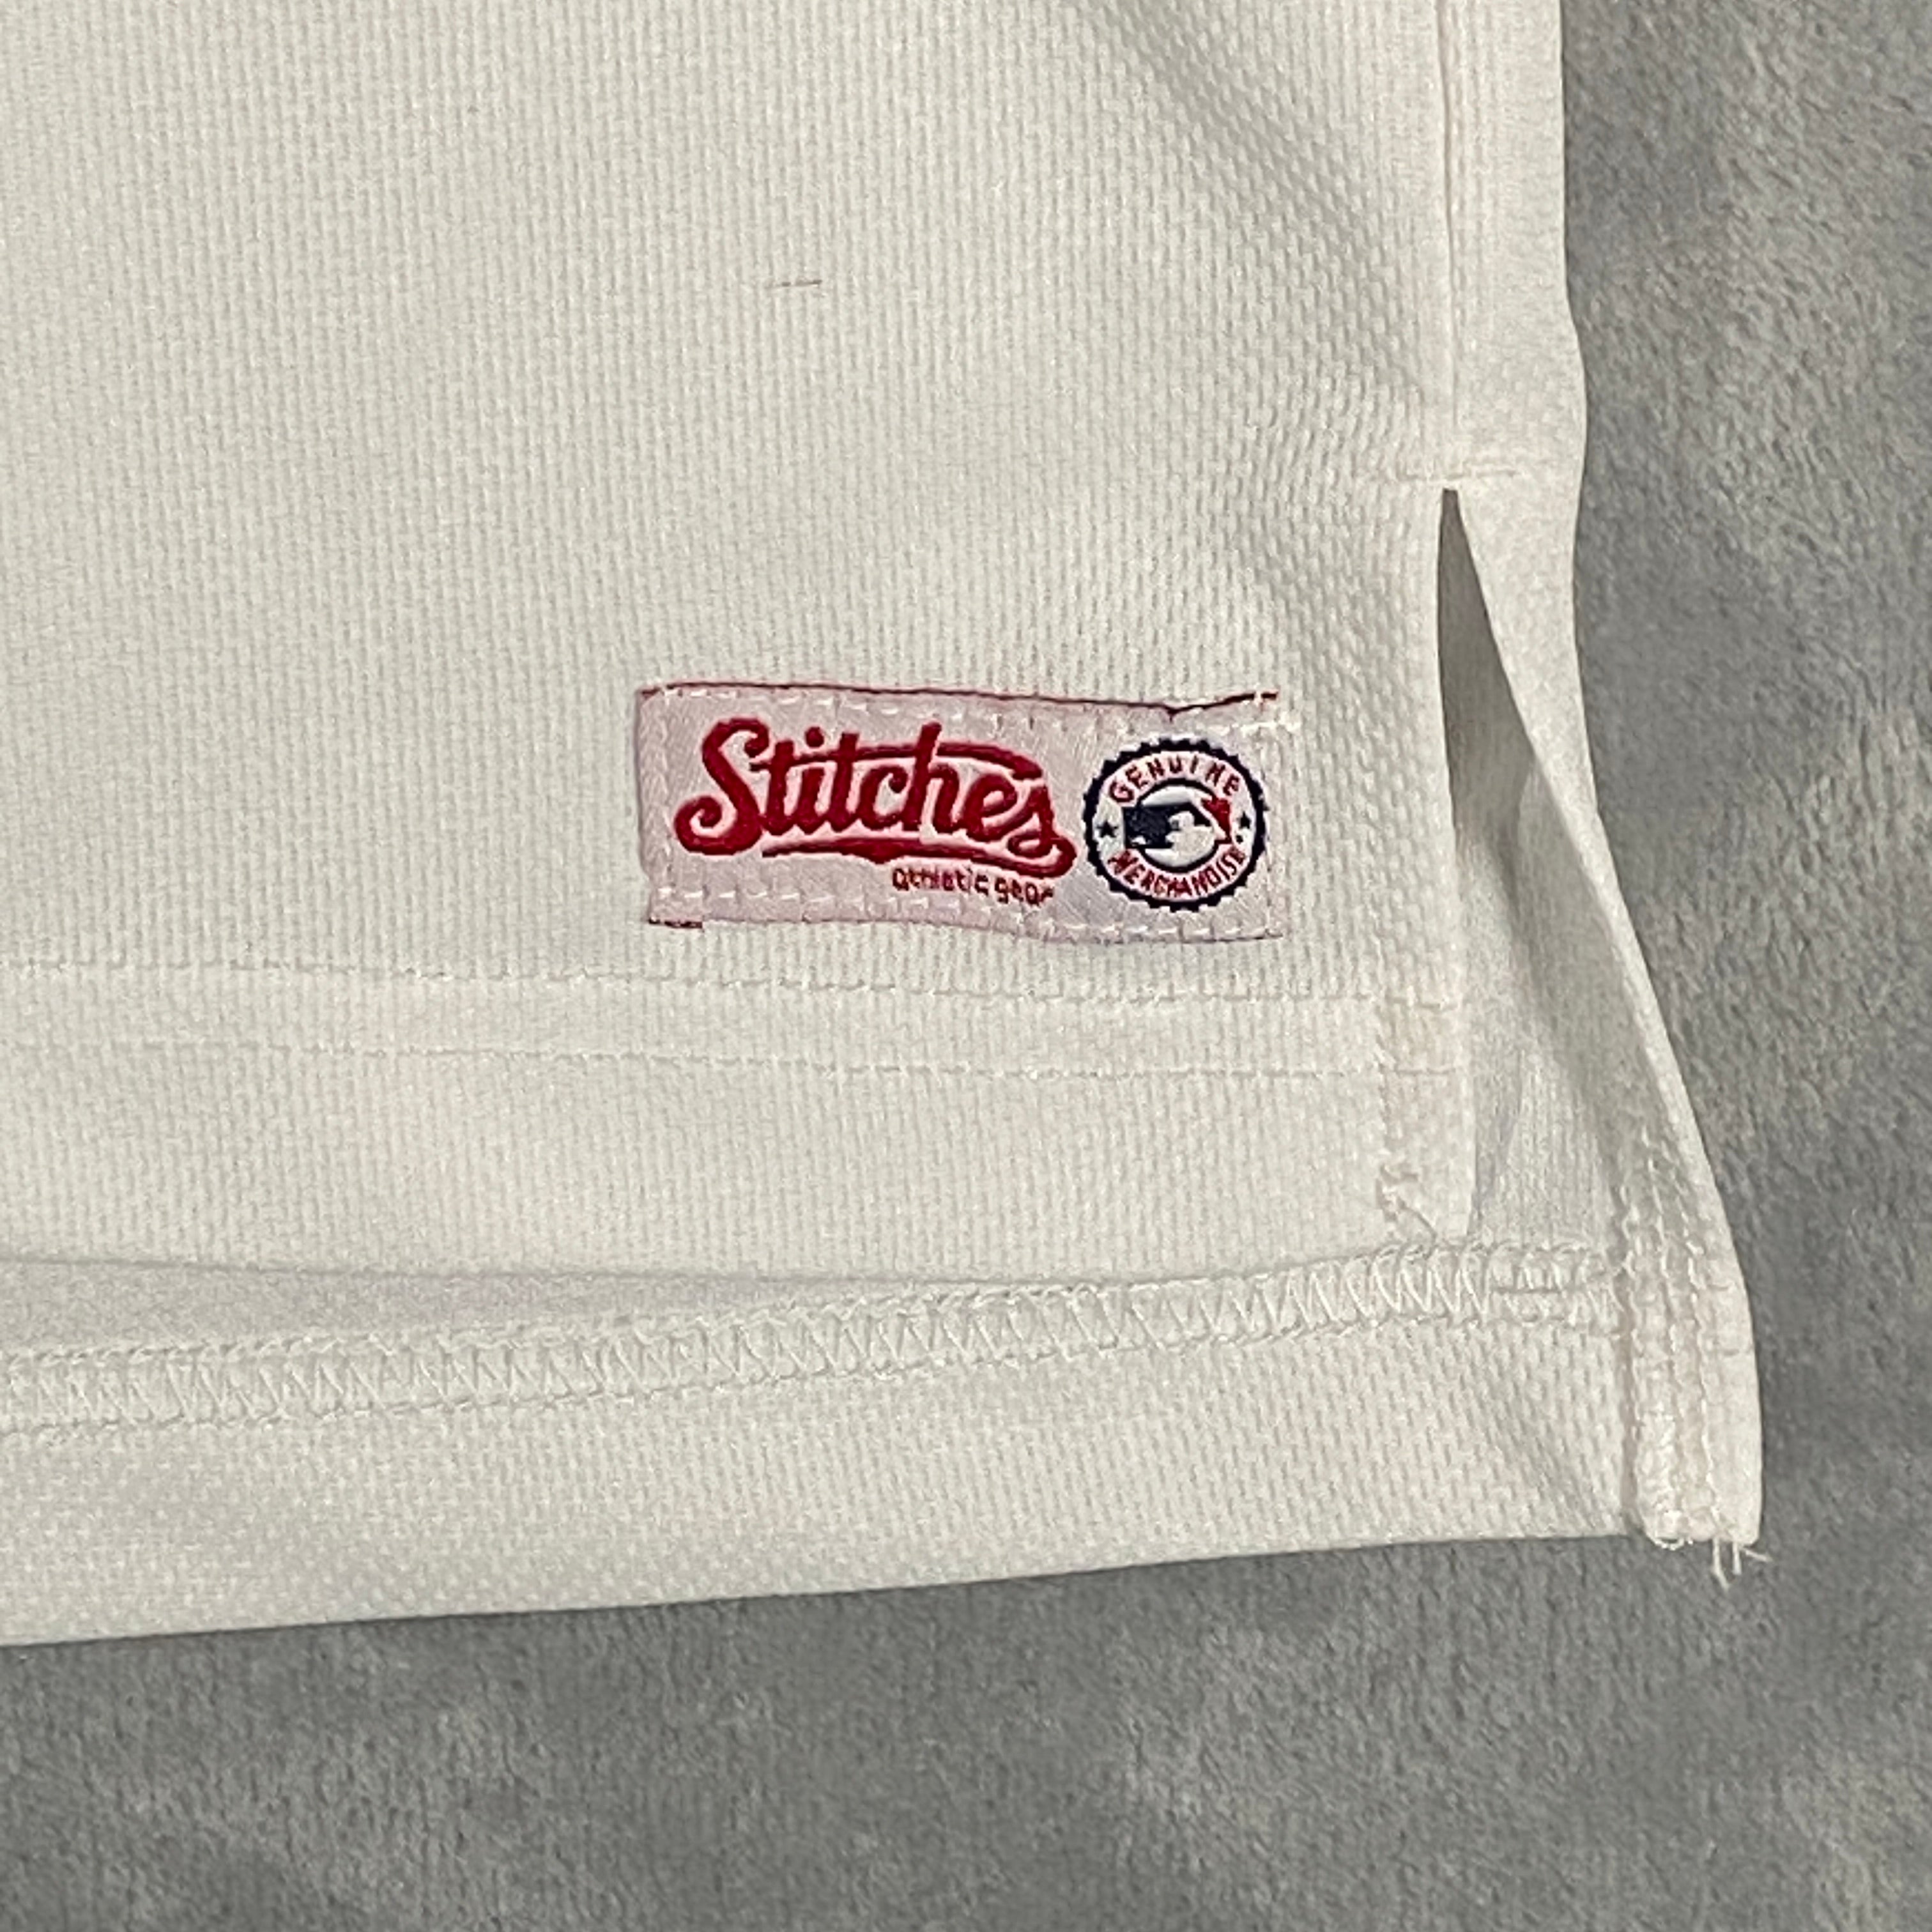 Stitches Mens Jersey Size M White Short Sleeve Sewn MLB San Francisco Giants